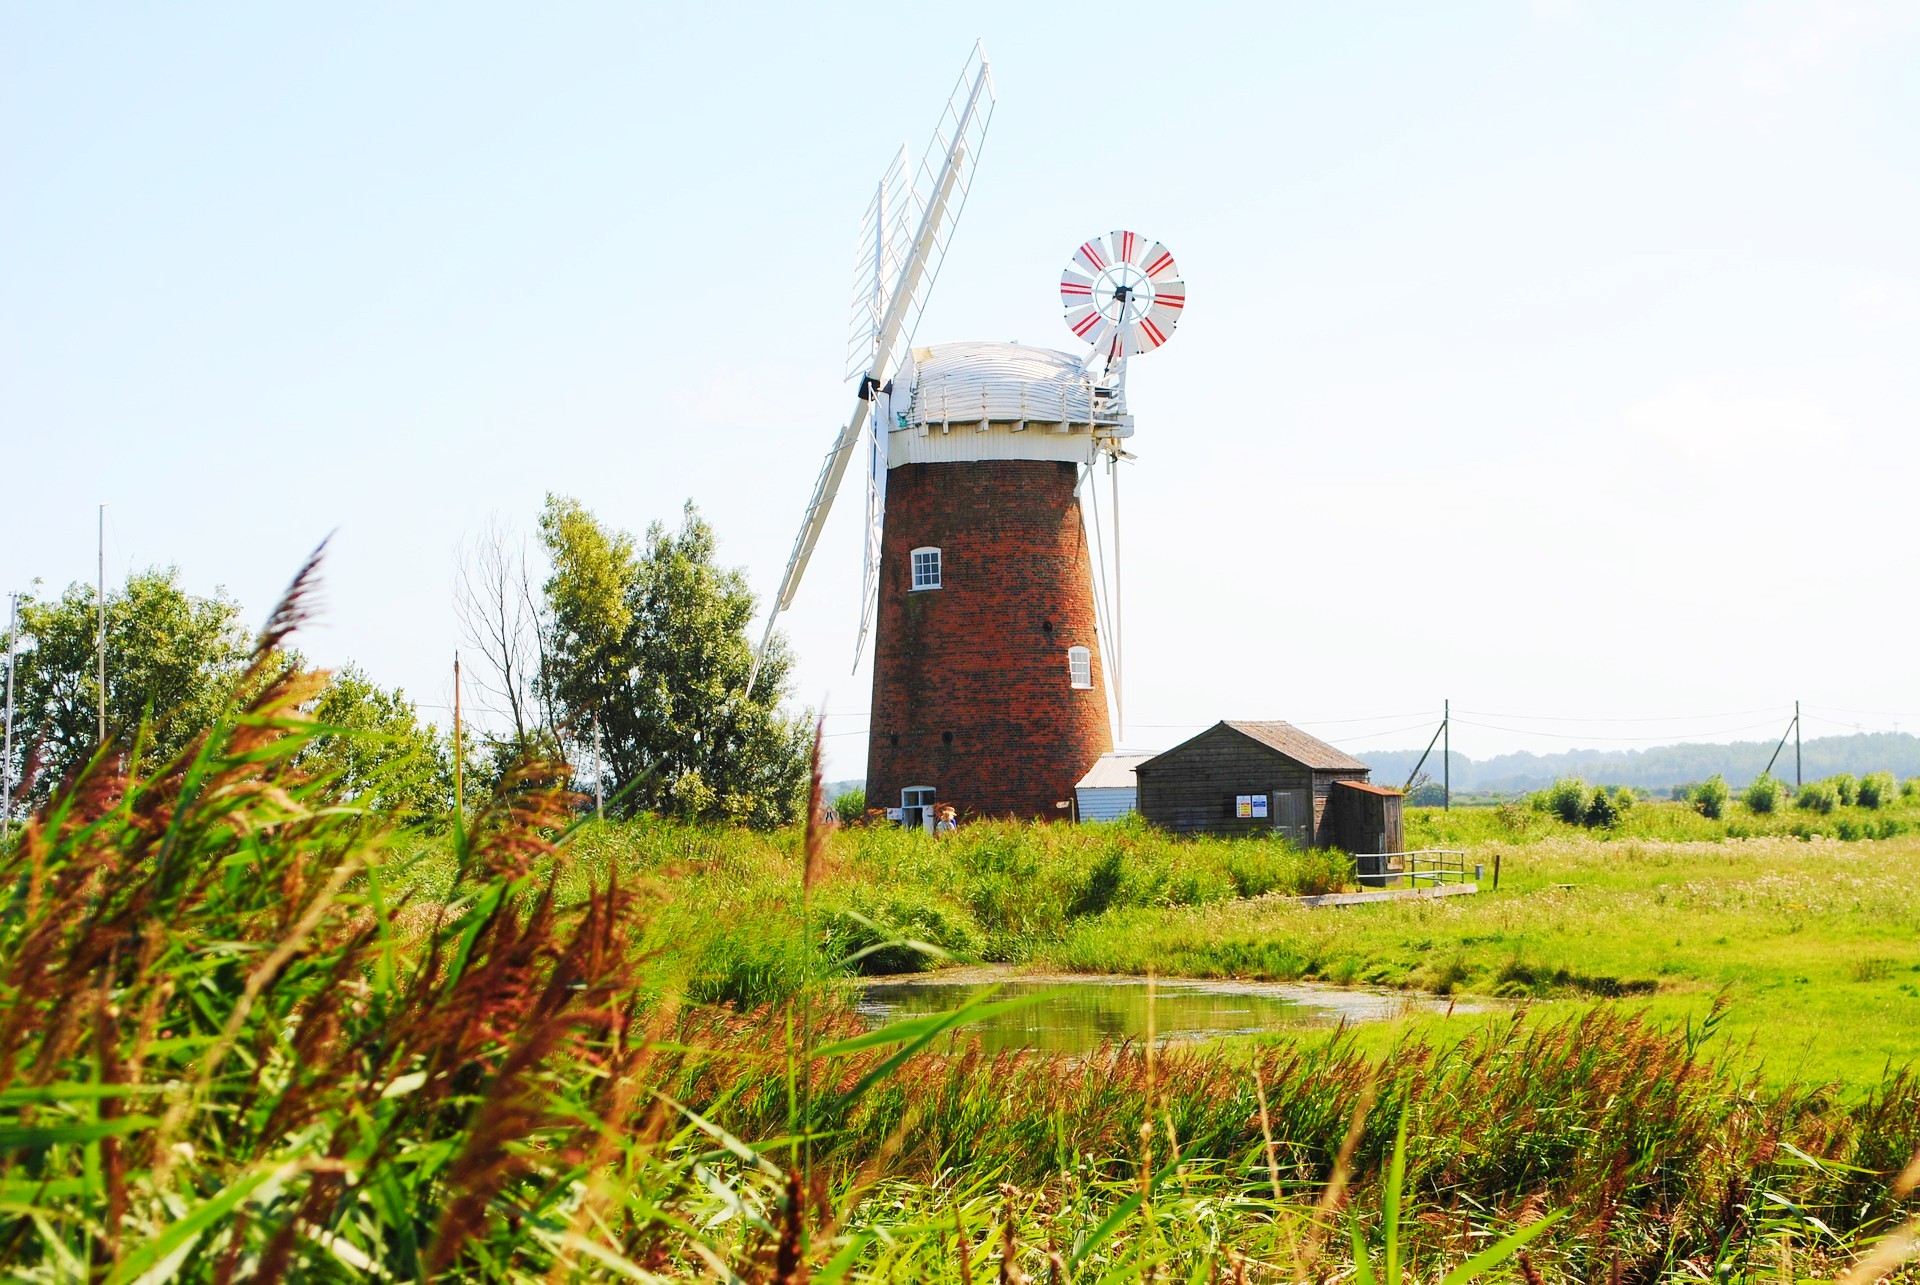 <img src="norfolk.jpg" alt="norfolk broads beautiful windmill"/> 